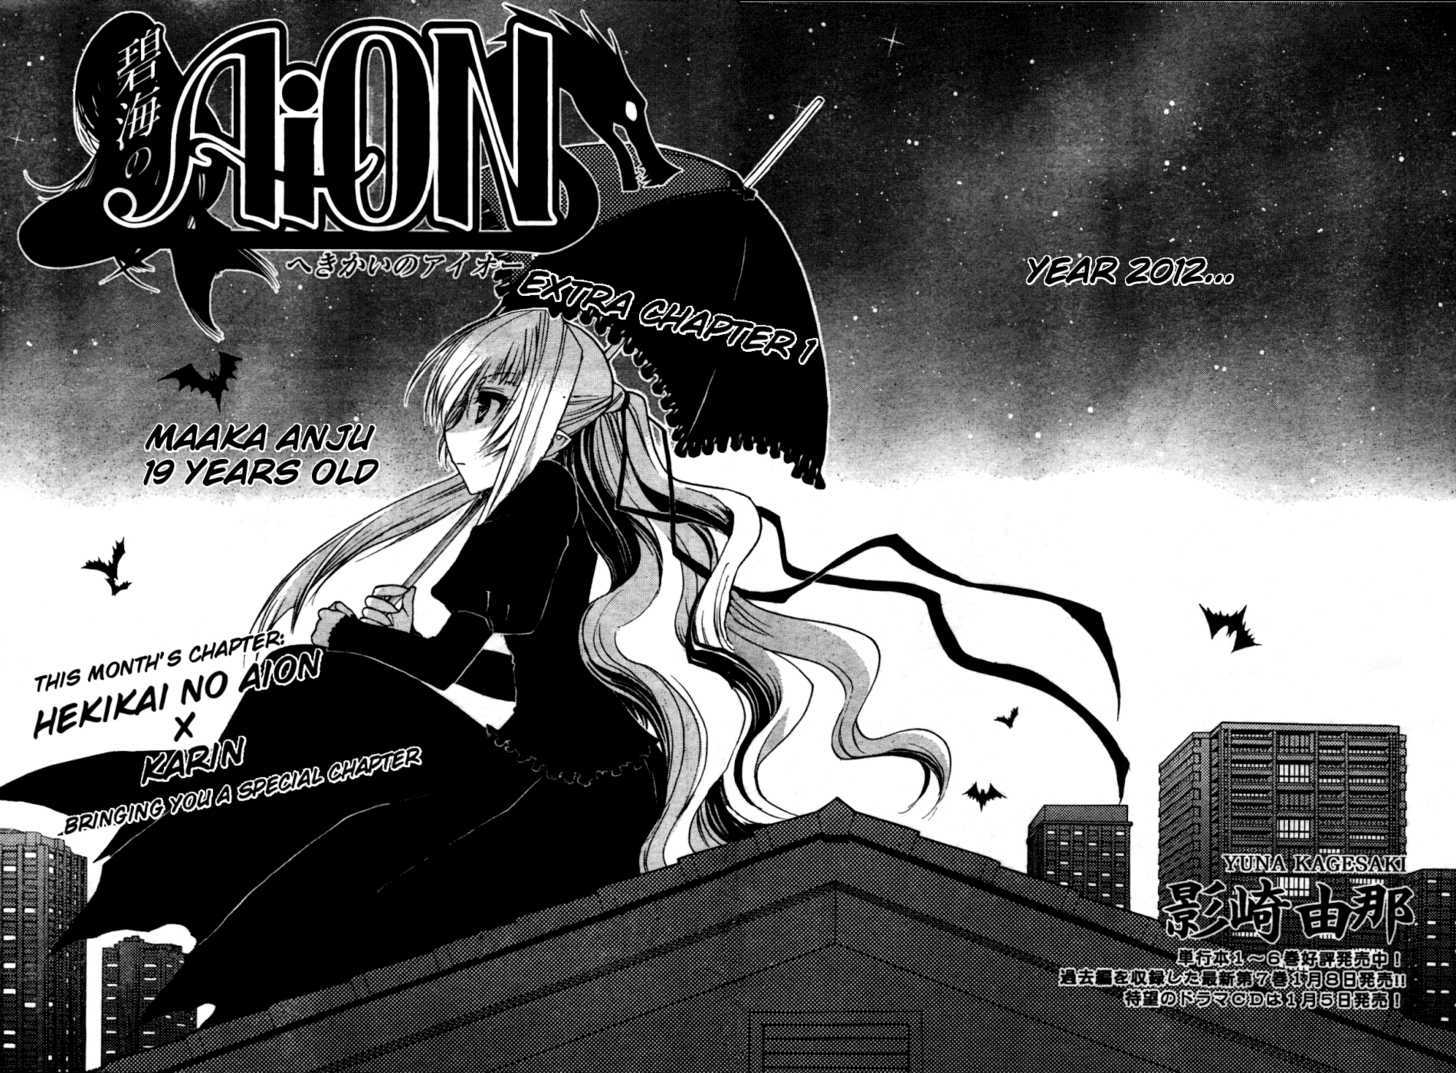 Hekikai No Aion Vol.6 Chapter 28.5 : [Extra Chapter 1] Hekikai No Aion X Karin - Picture 2